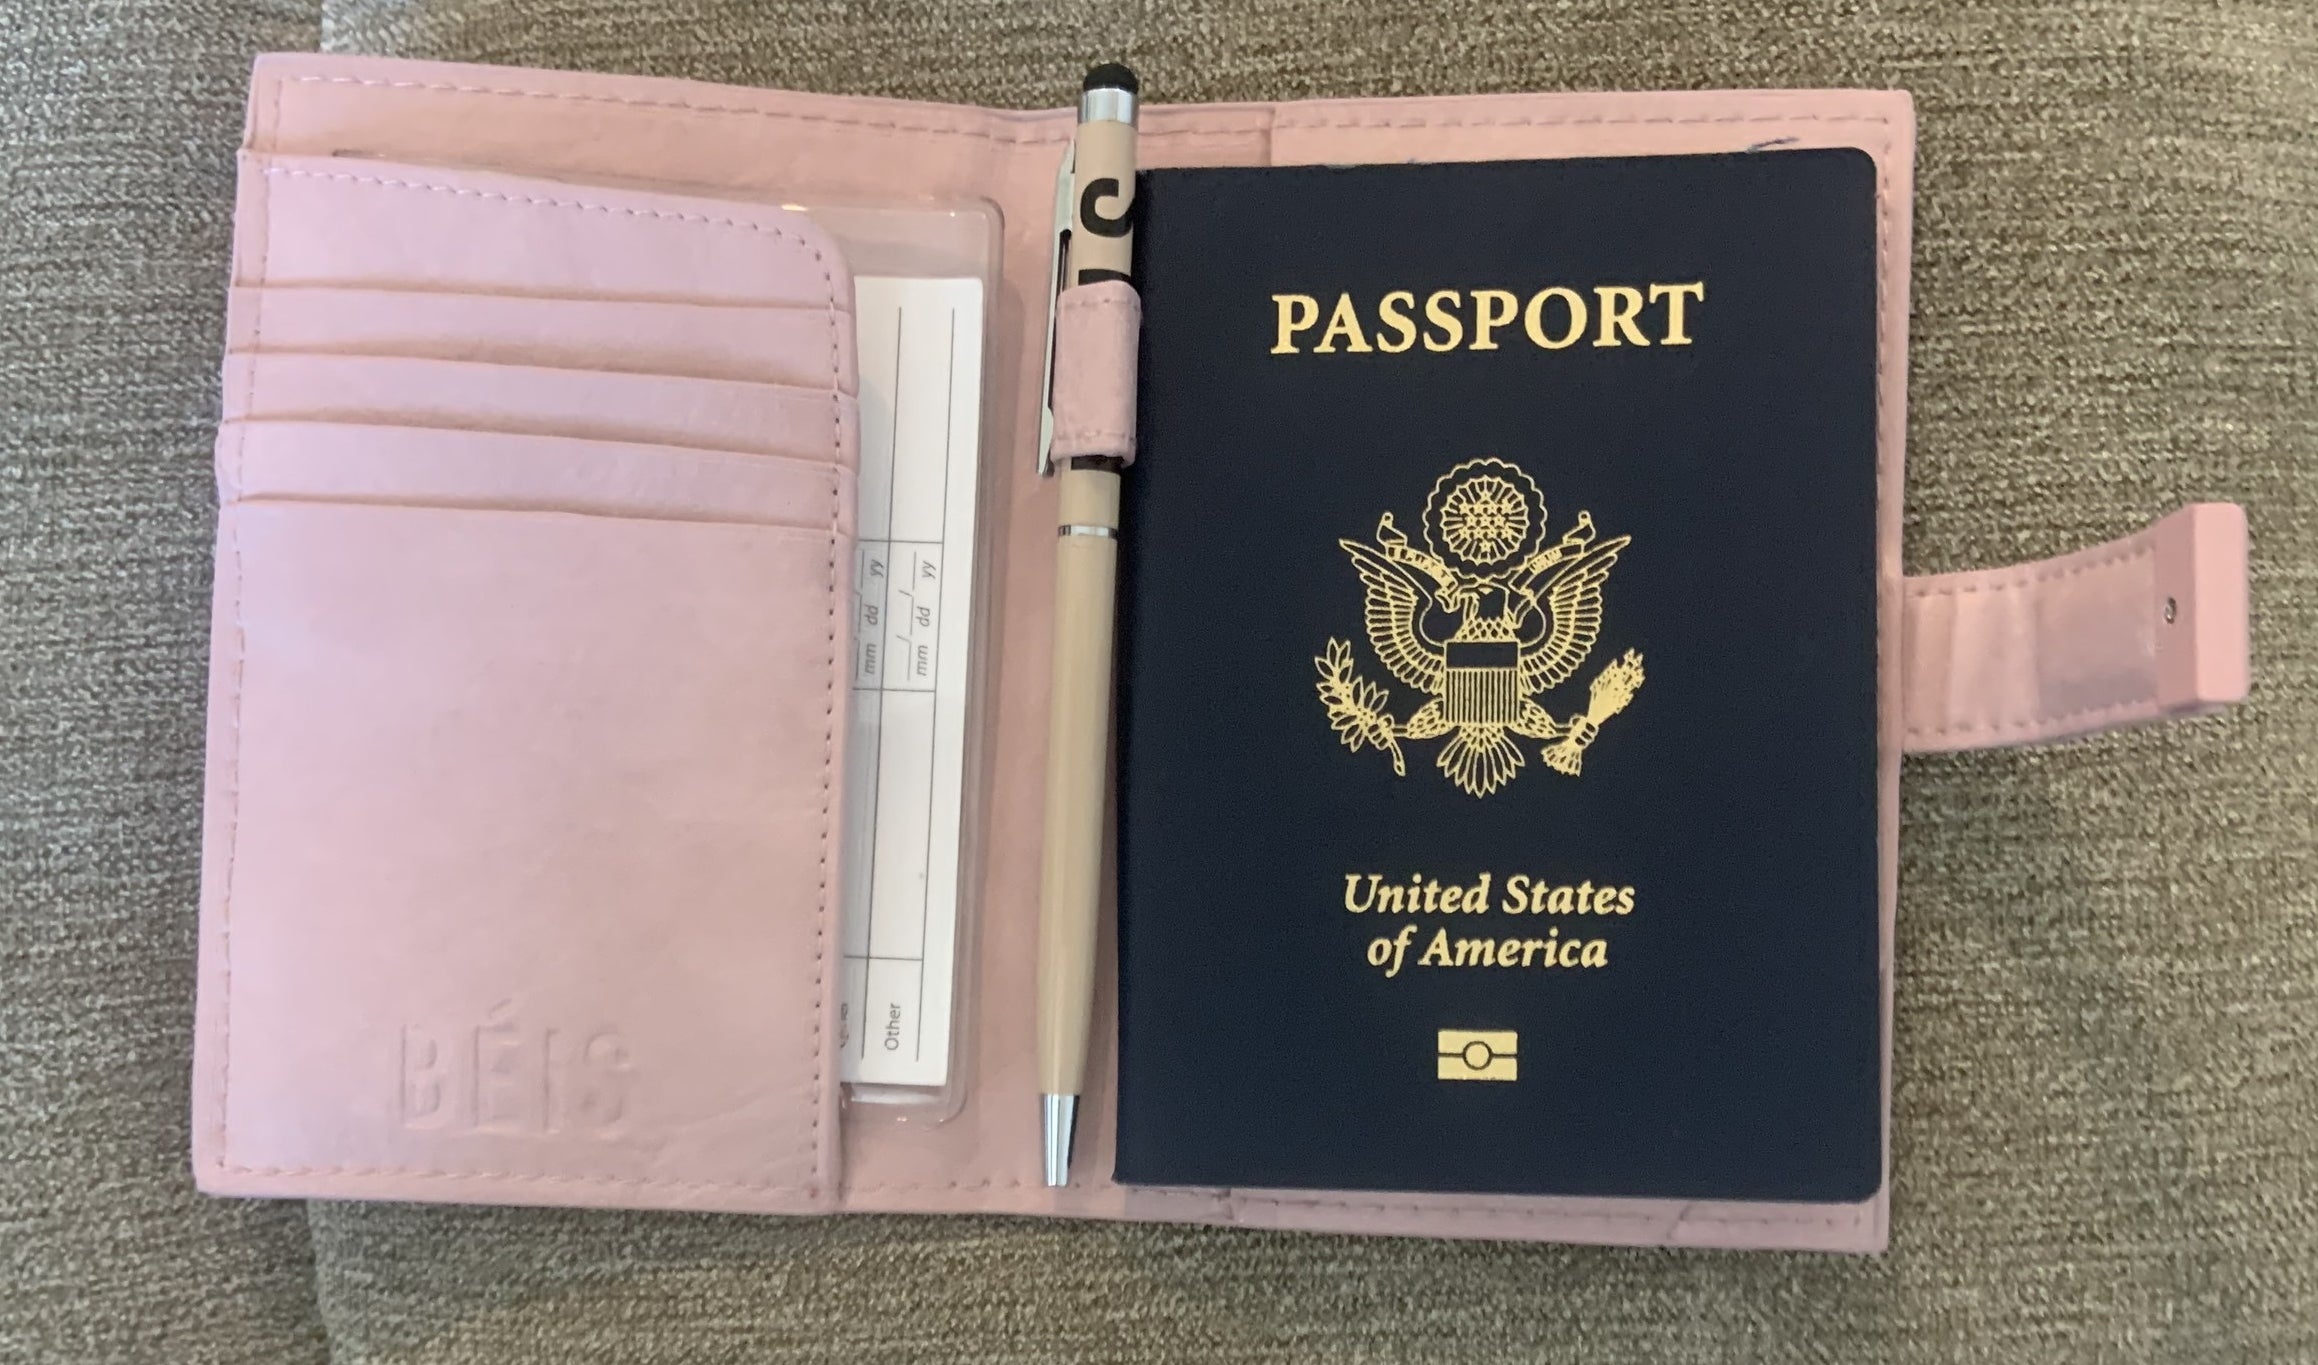 passport inside the wallet